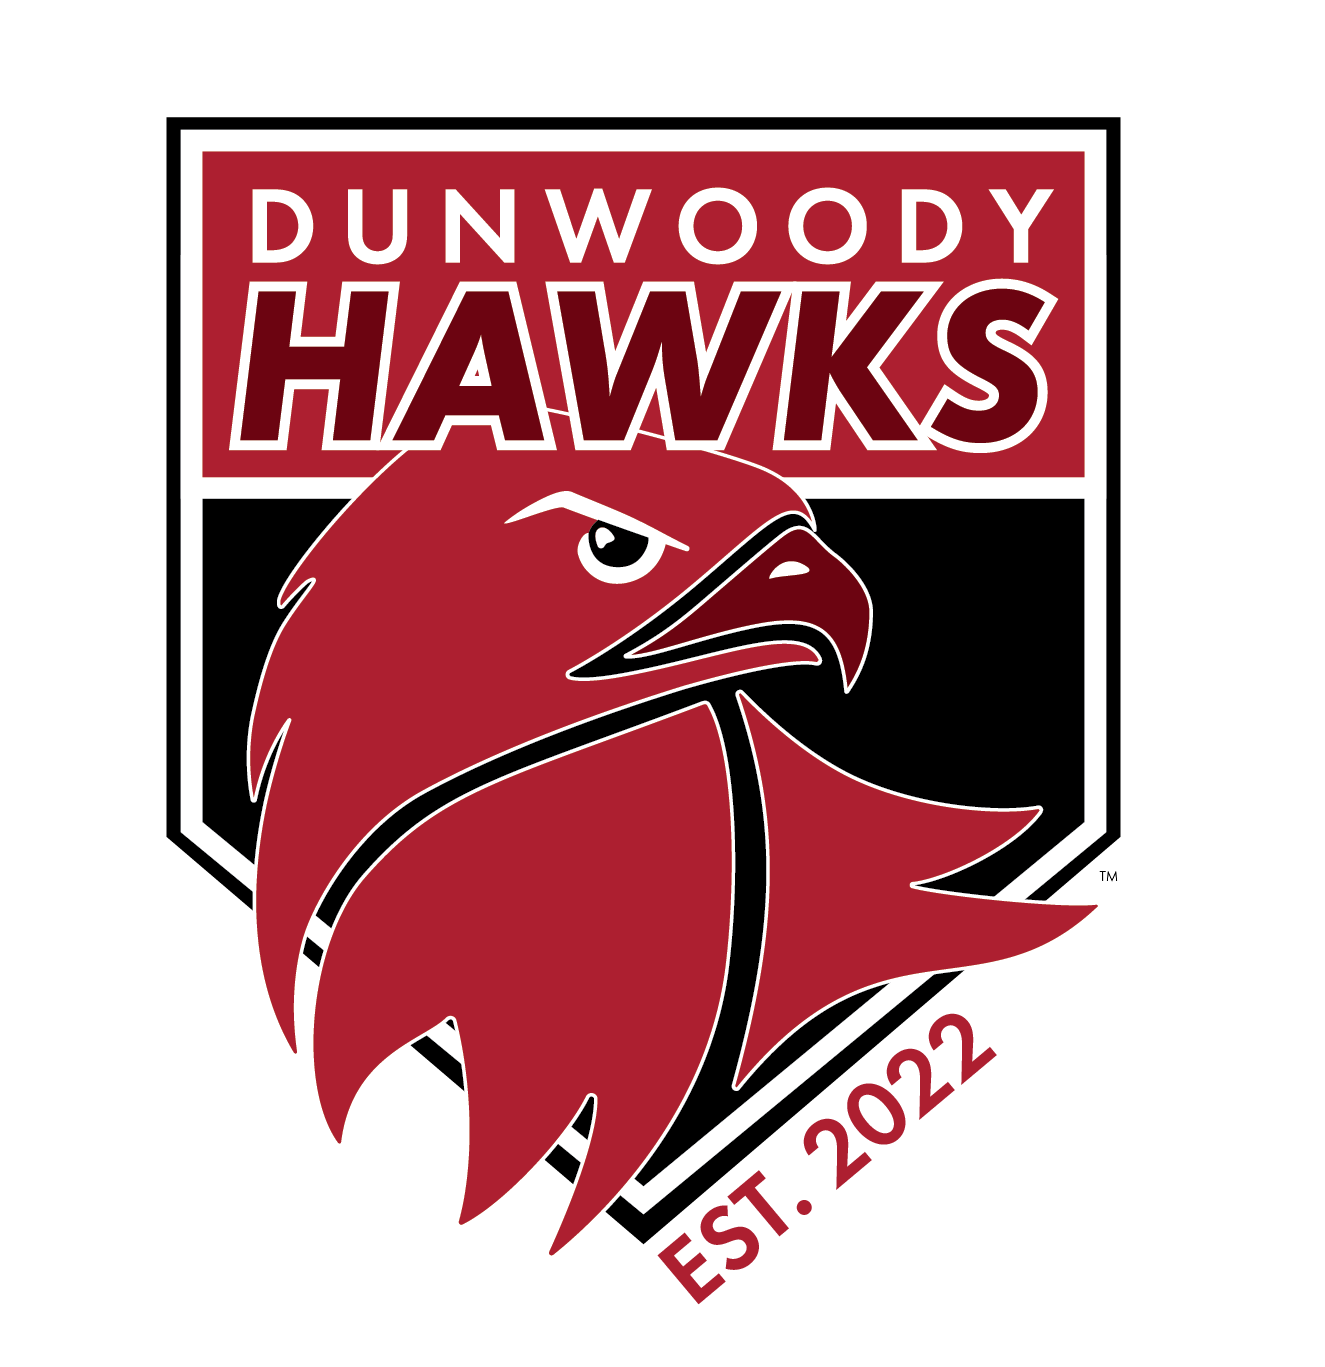 Dunwoody Hawks logo